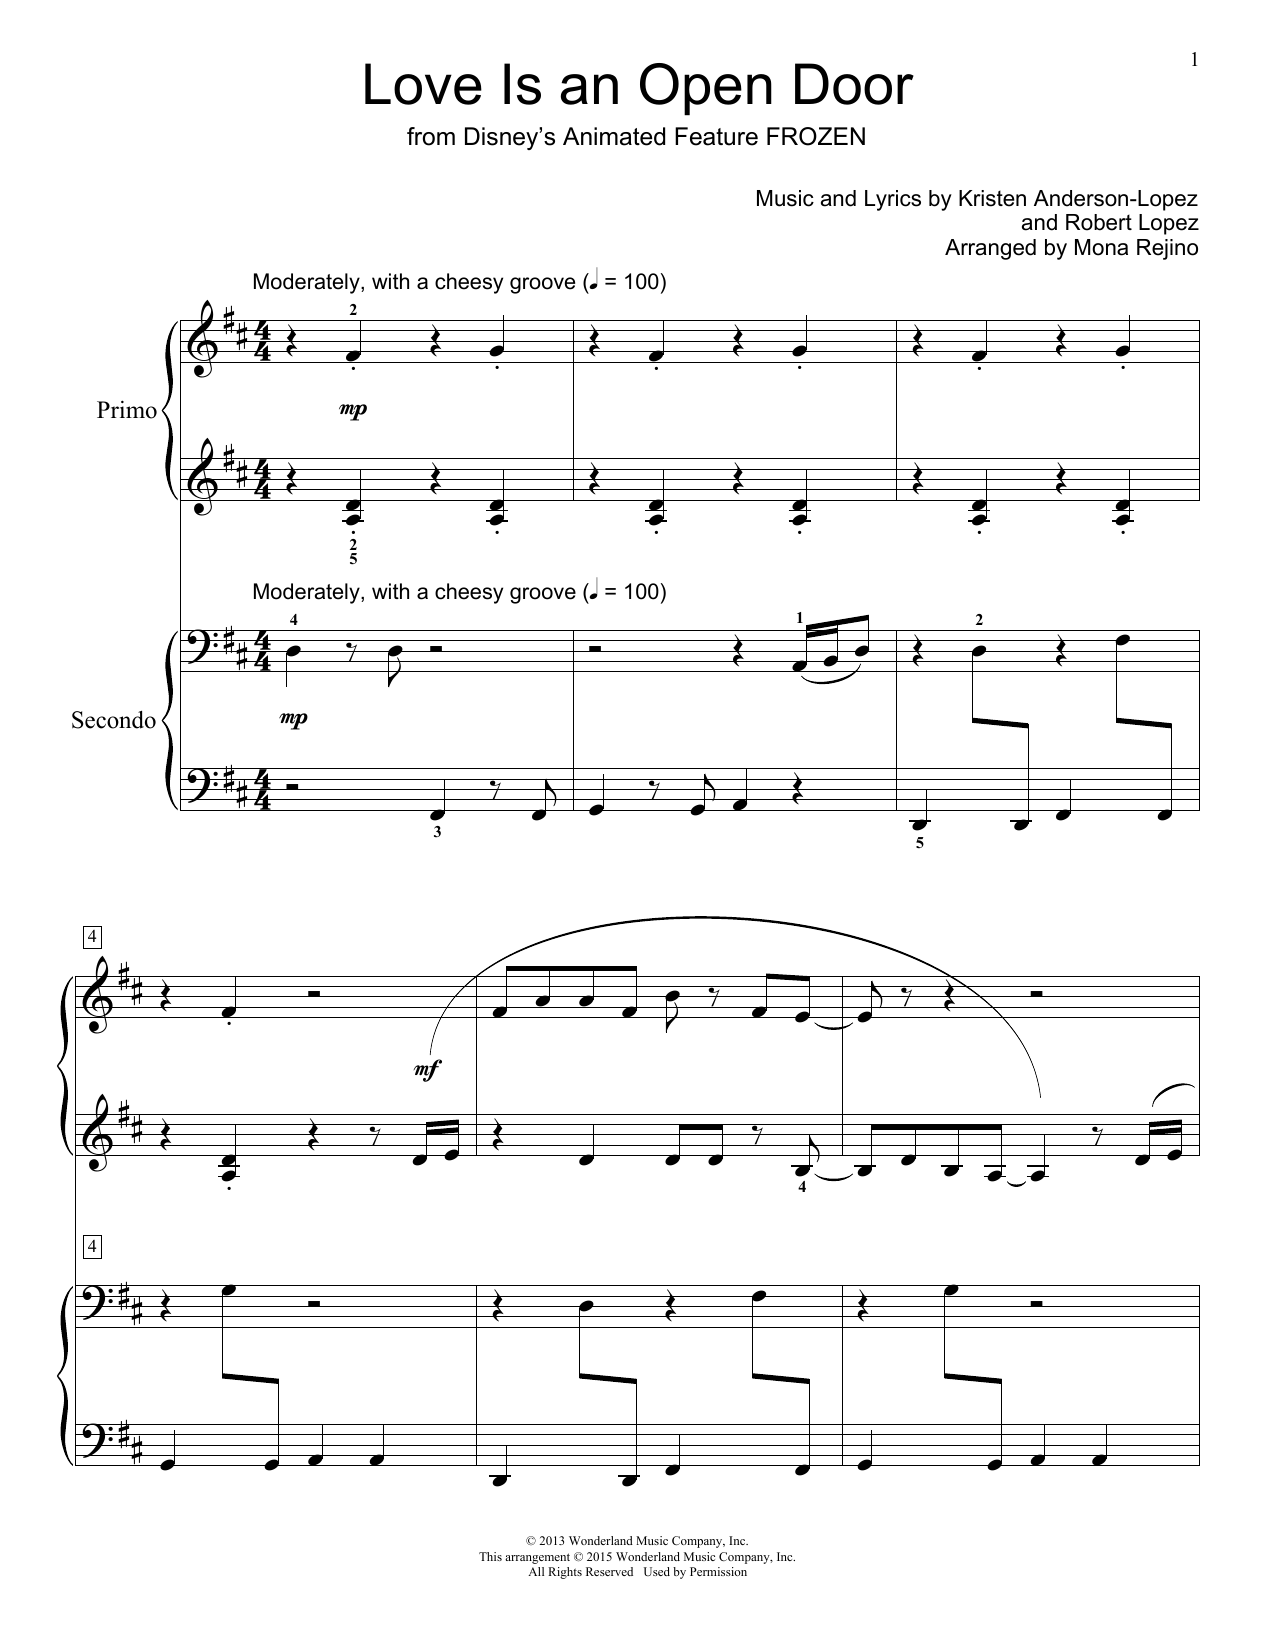 Kristen Bell & Santino Fontana Love Is An Open Door (from Disney's Frozen) (arr. Mona Rejino) Sheet Music Notes & Chords for Piano Duet - Download or Print PDF